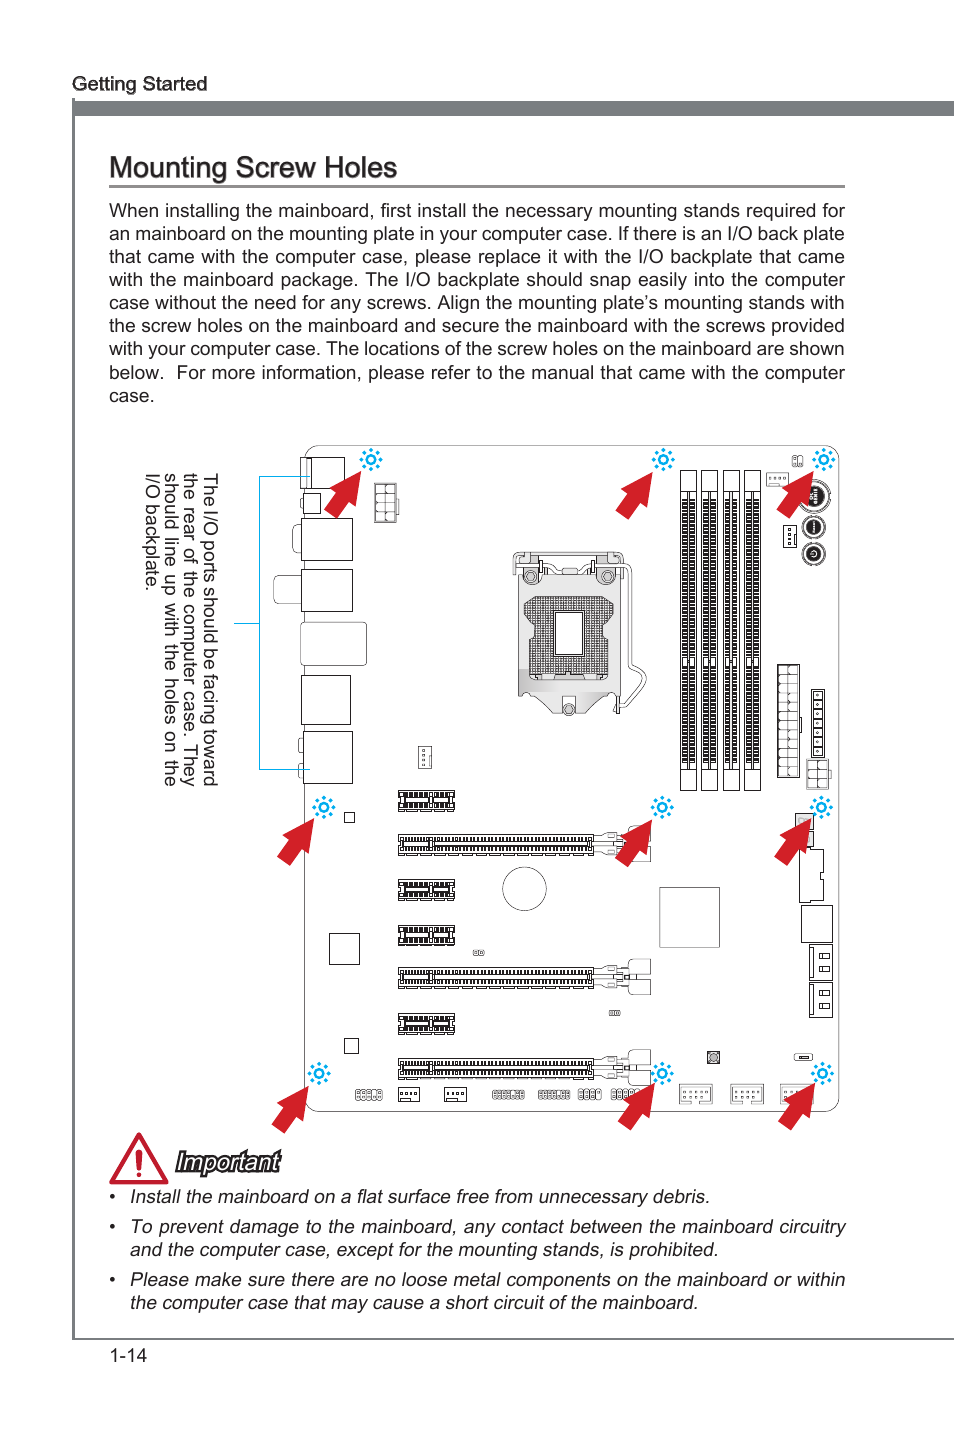 Mount ng screw holes -14, Mount ng screw holes, Important | MSI Z77 MPOWER  User Manual | Page 26 / 100 | Original mode